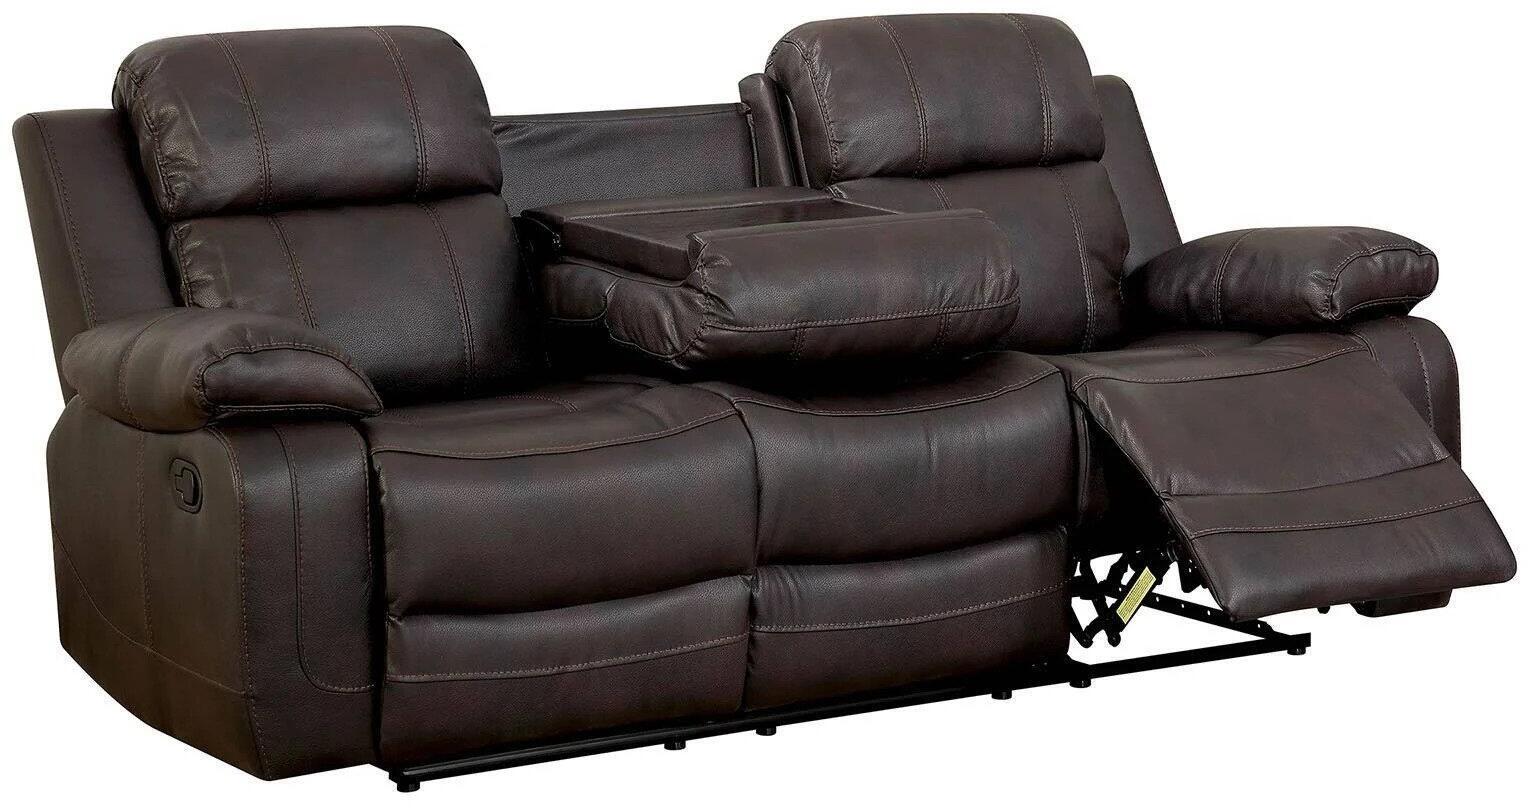 

    
Furniture of America CM6568-3PC Pondera Recliner Sofa Loveseat and Chair Dark Brown CM6568-3PC
